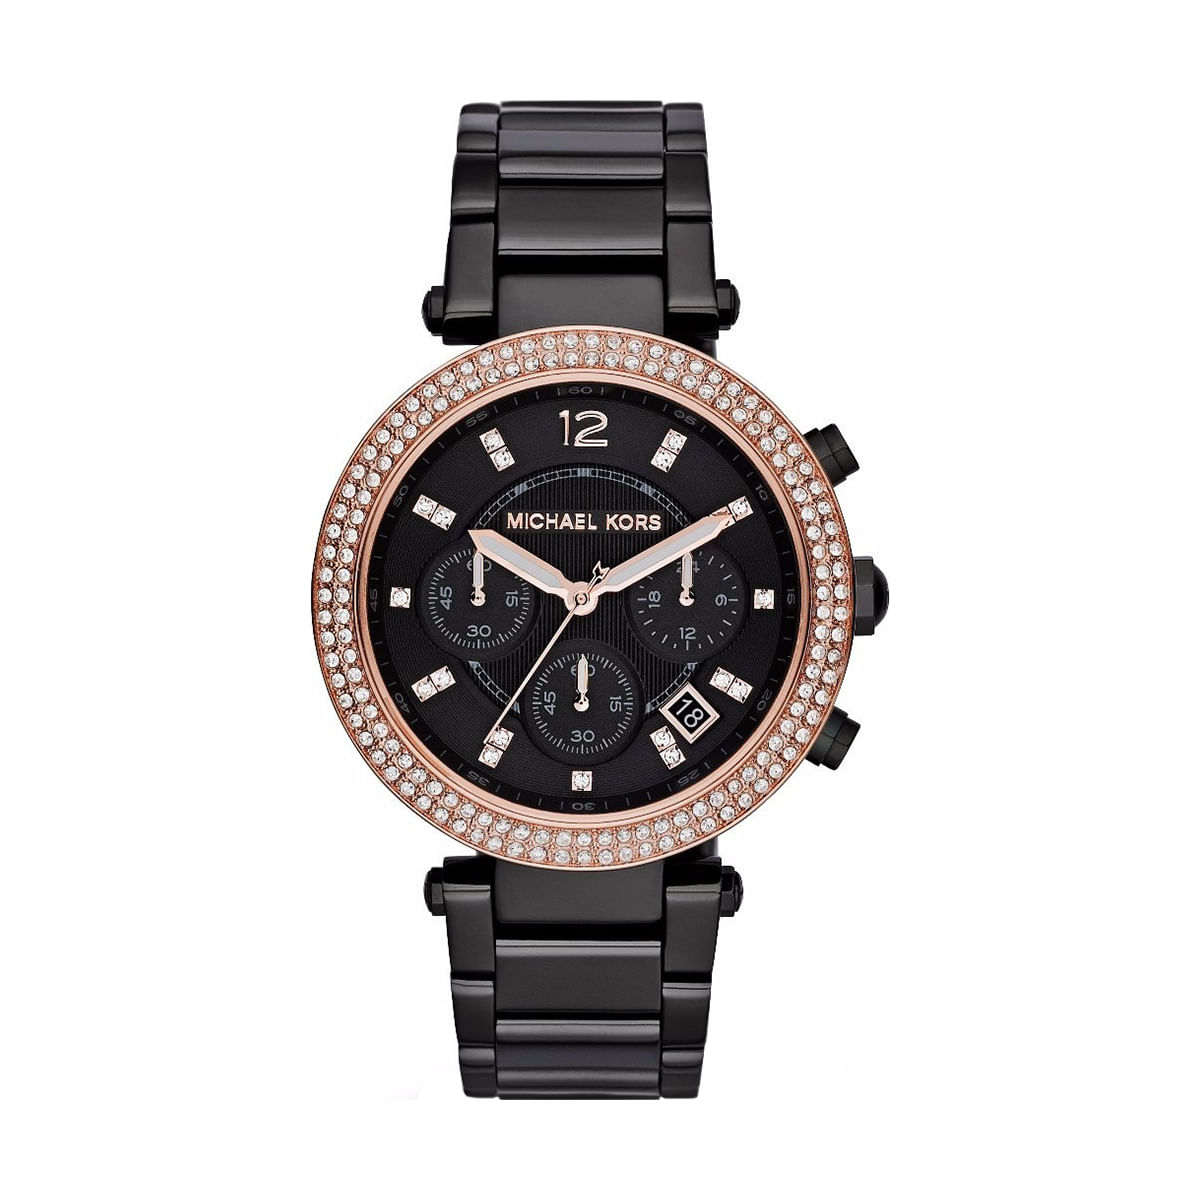 Reloj Michael Kors MK5885 Black para Dama Nuevo Genuino